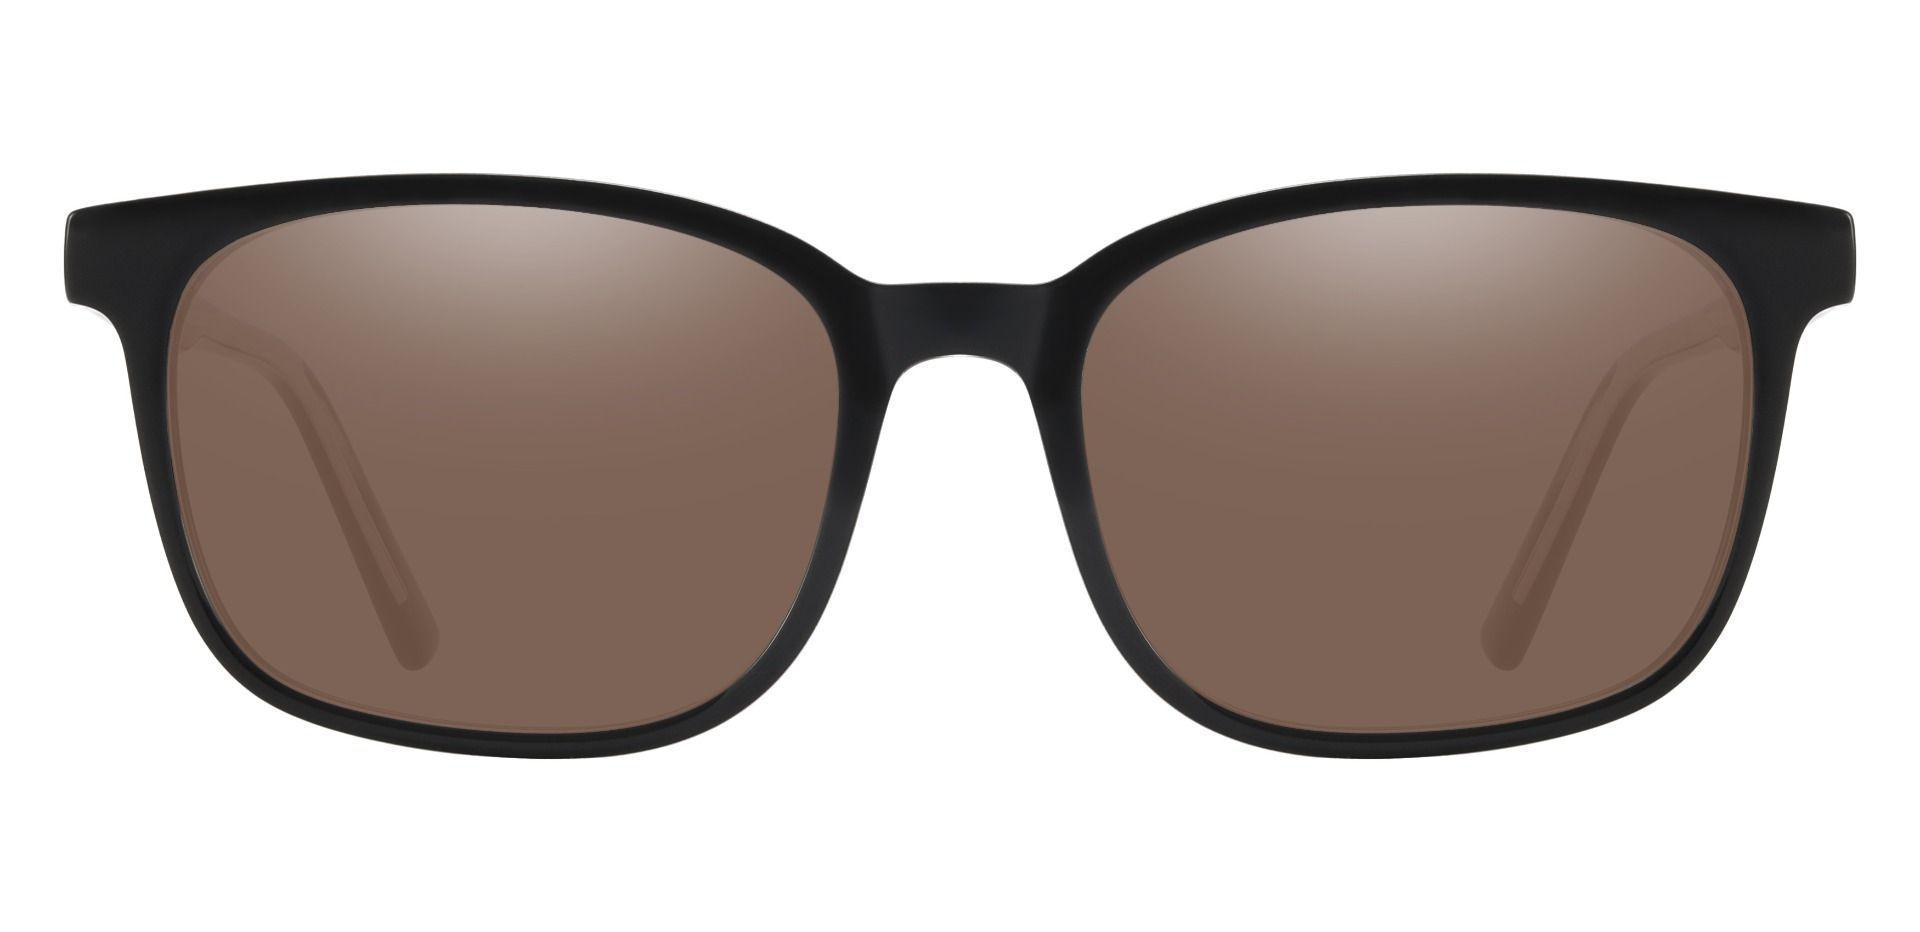 Windsor Rectangle Reading Sunglasses - Black Frame With Brown Lenses